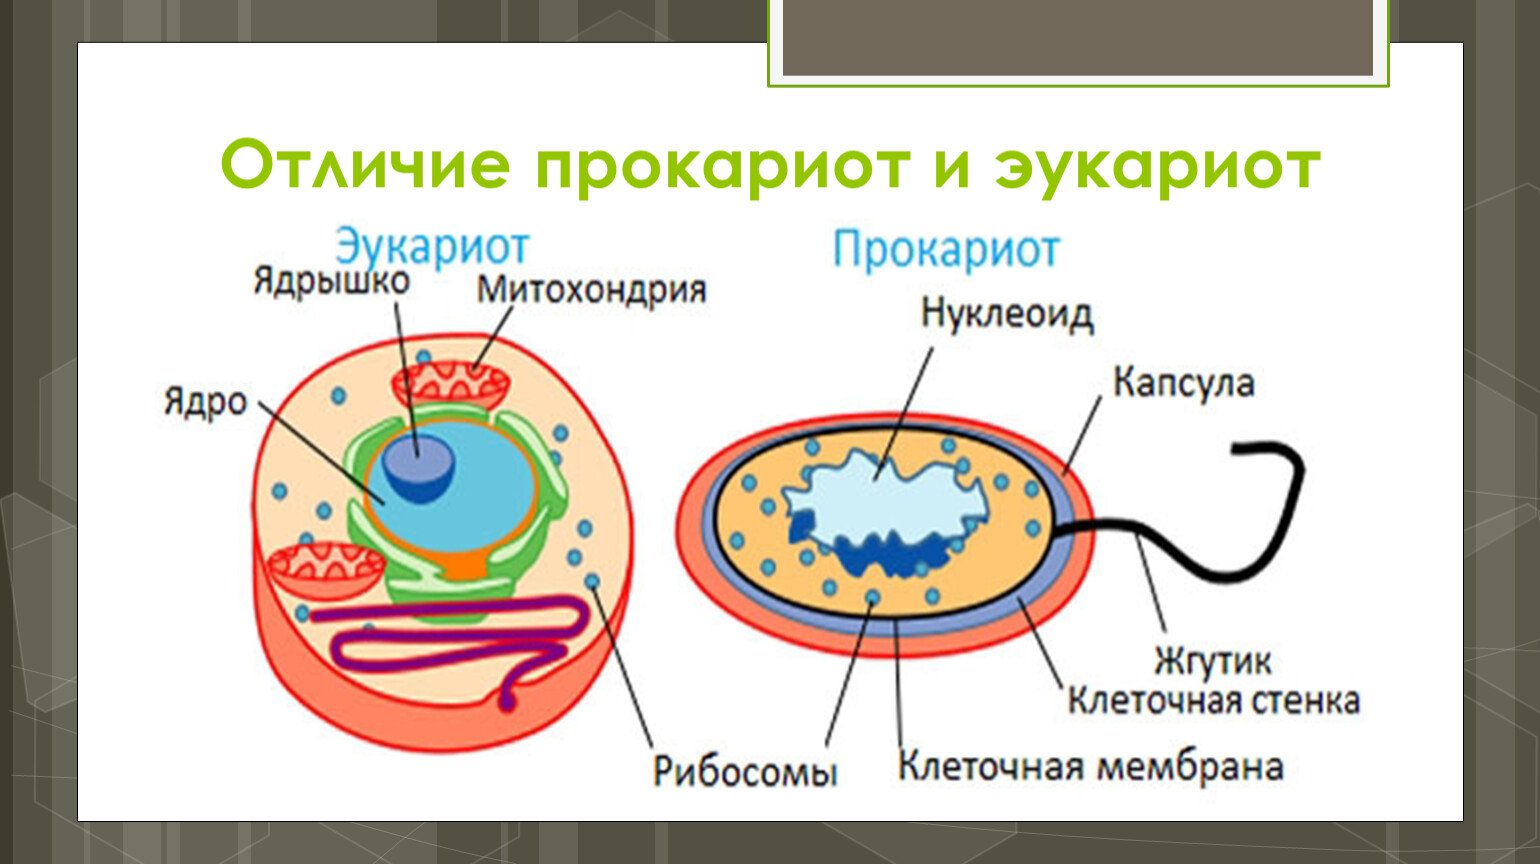 В клетках прокариот в отличие. Отличие прокариотической клетки от эукариотической клетки. Строение прокариот и эукариот. Клетка бактерий и эукариот. Различие эукариот от прокариот.